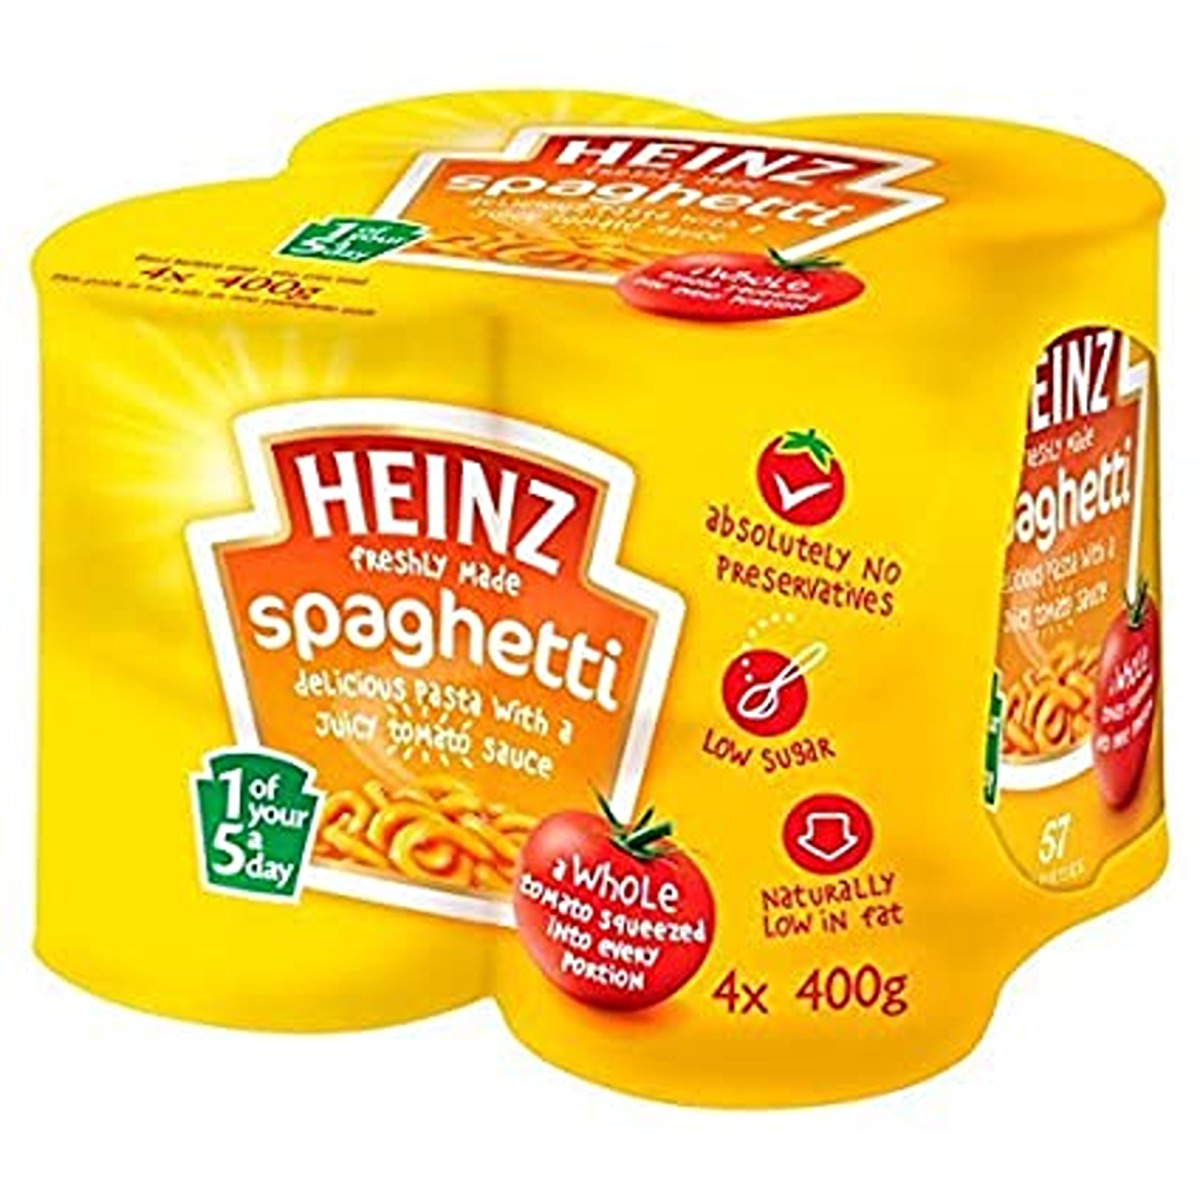 Heinz - Spaghetti - 4 x 400g - Continental Food Store